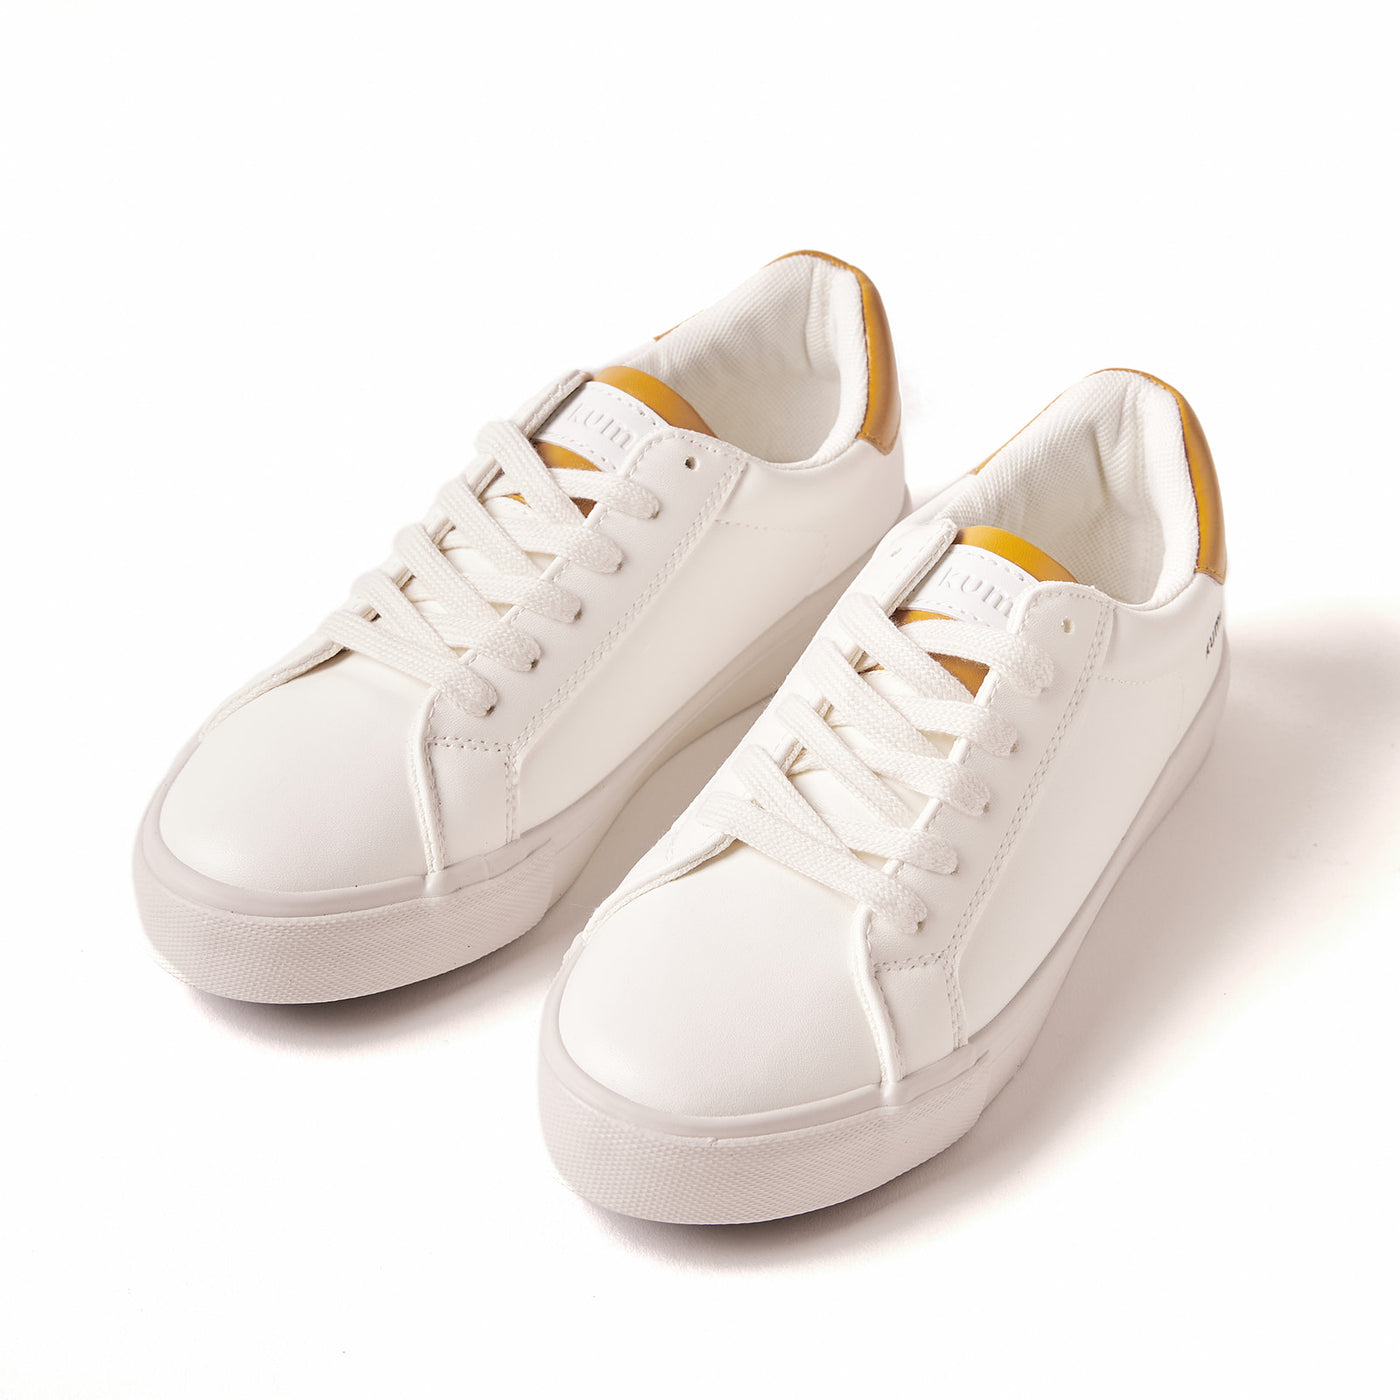 Retro sneakers White/Maple